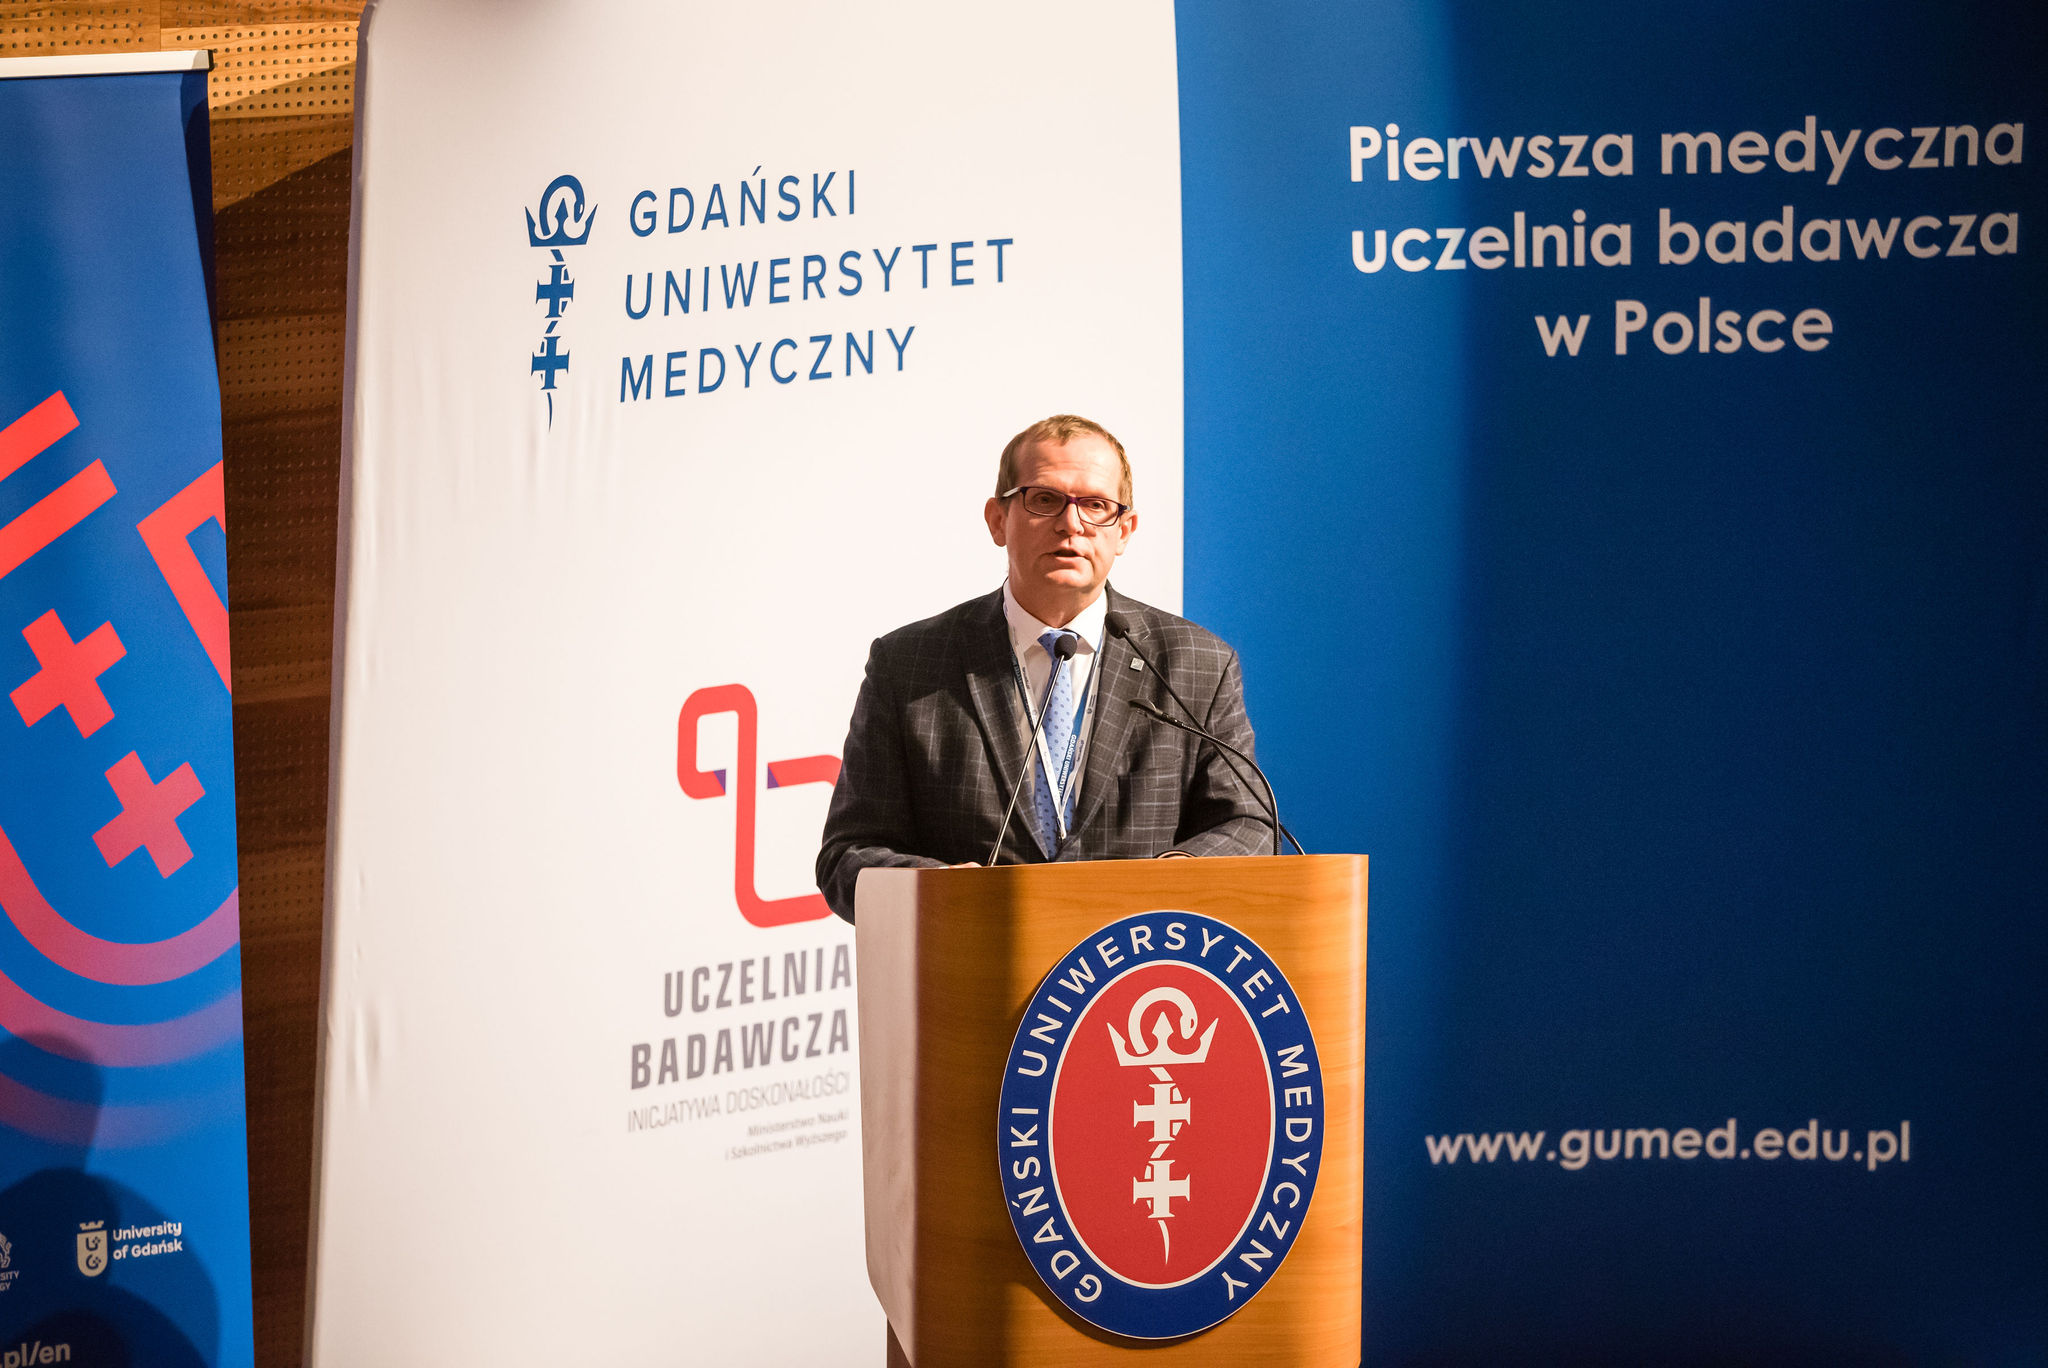 prof. M. Markuszewski during the FarU Business Convention visit the MUG